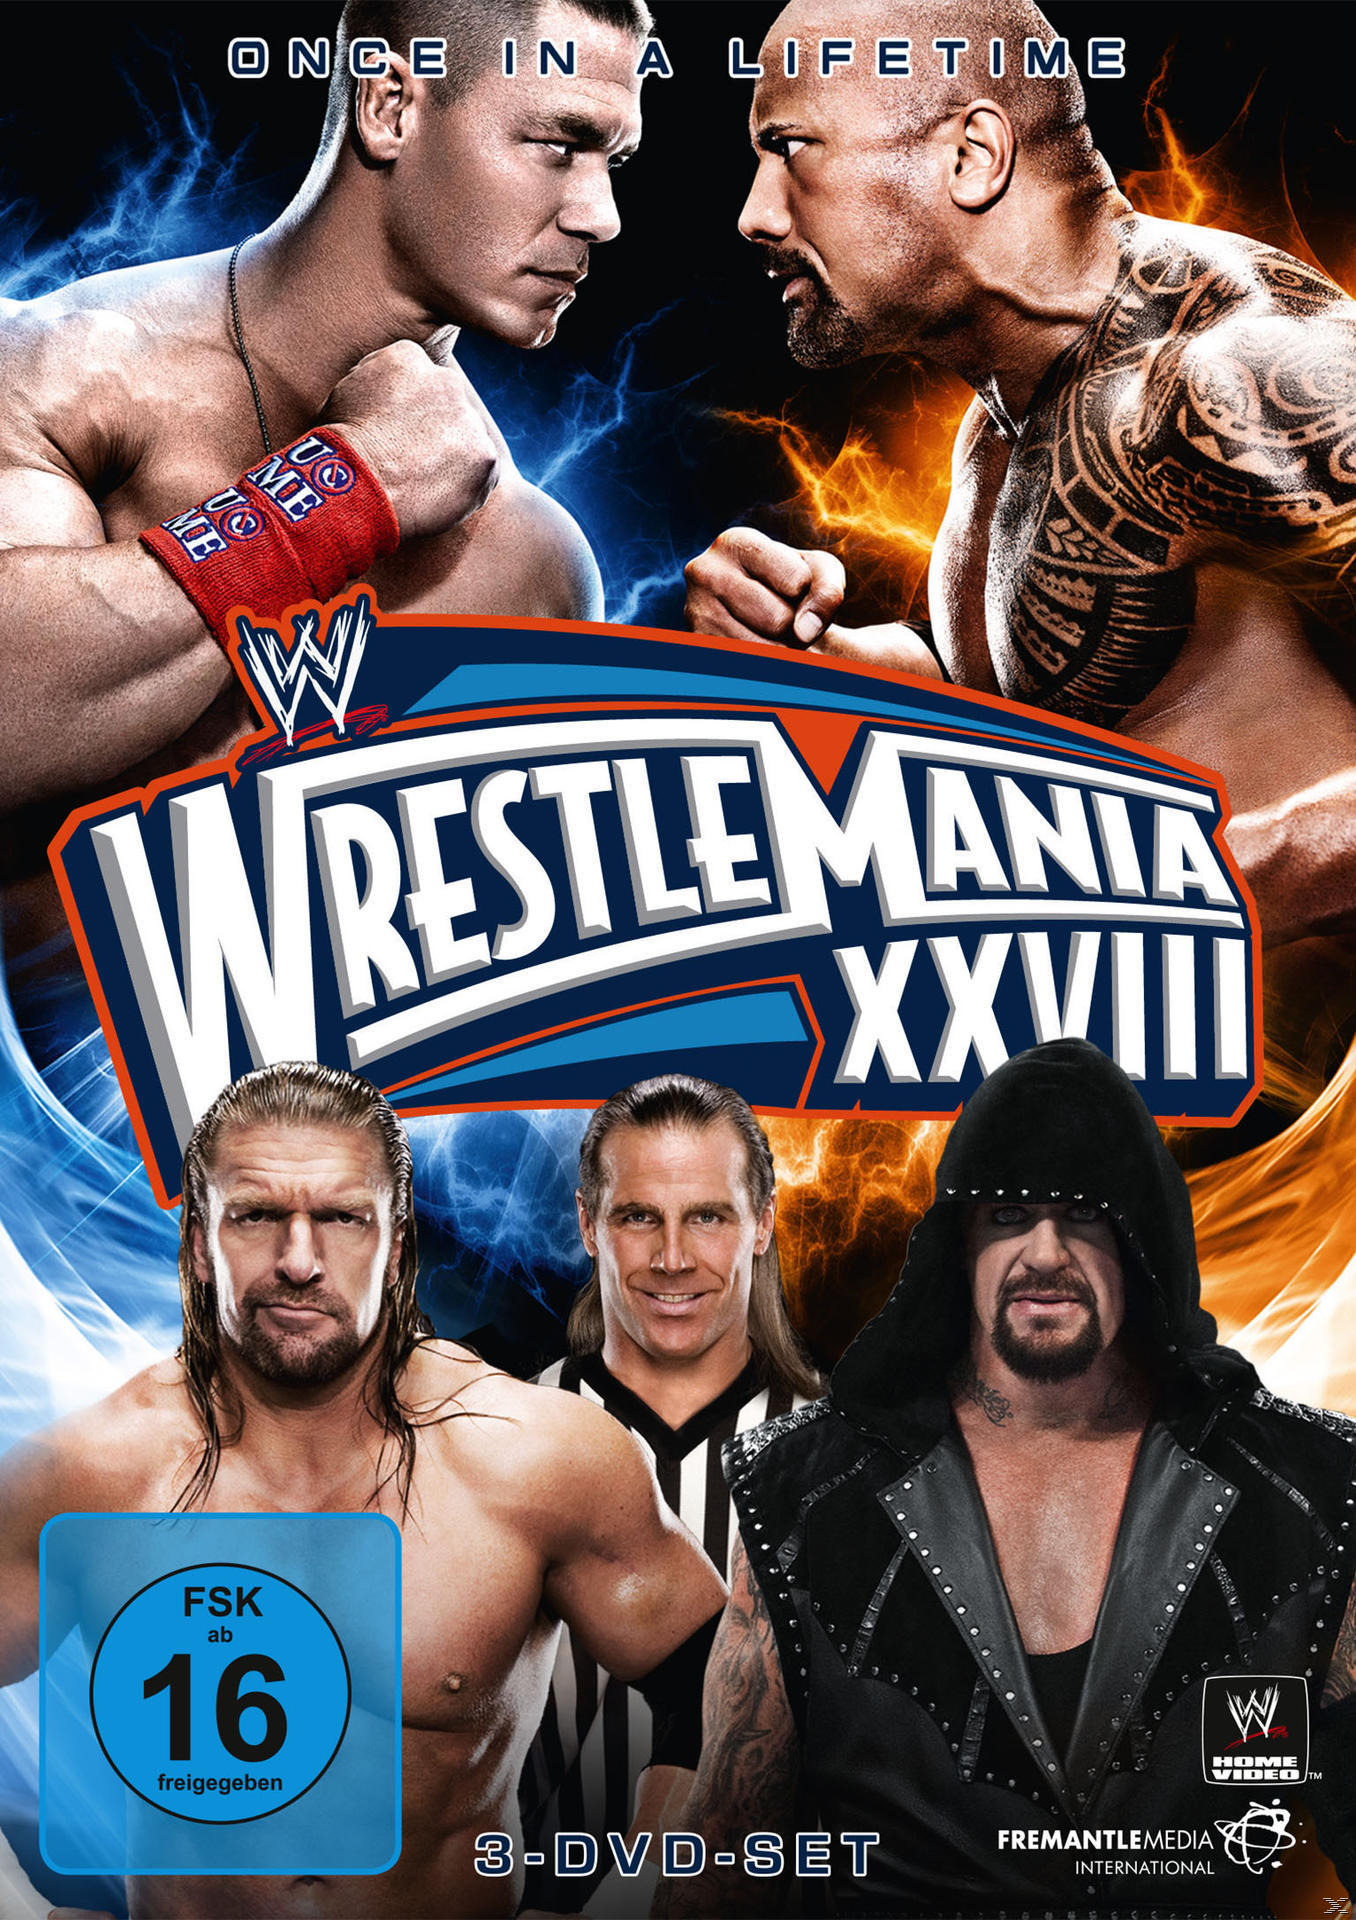 Wrestlemania 28 DVD